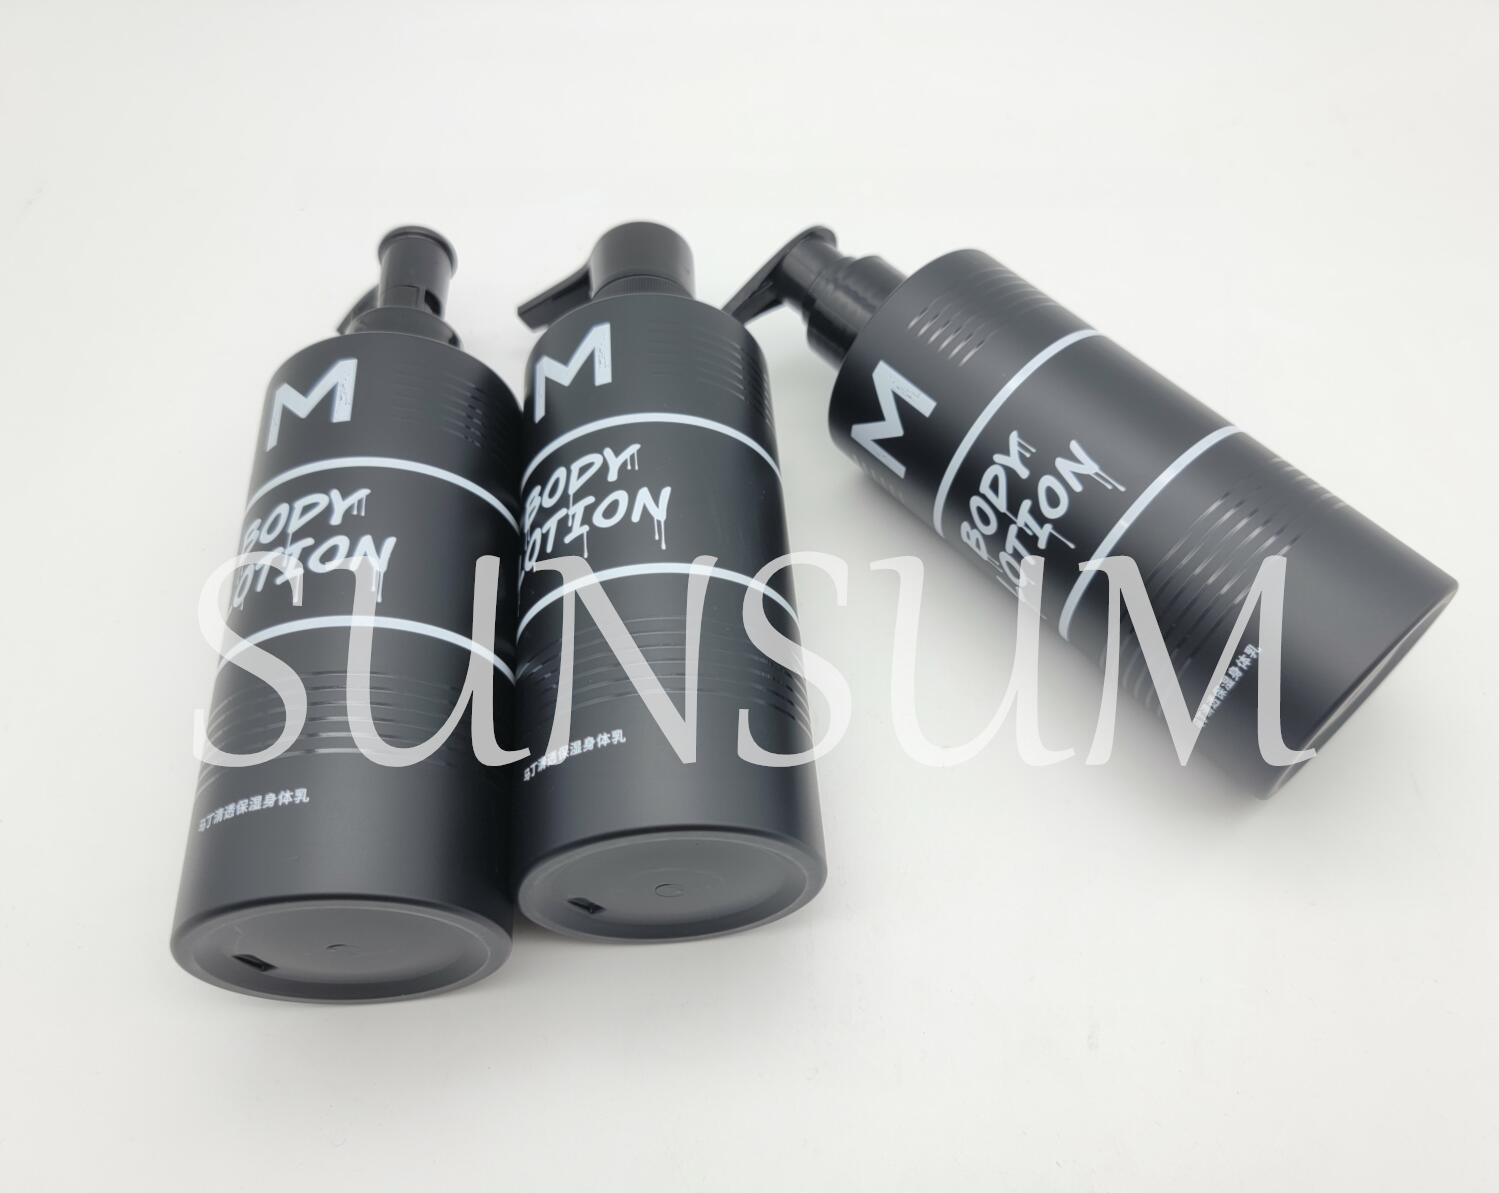 Matt Black Pet Plastic 500ml 250ml Body Lotion Bottle with Pump for Men